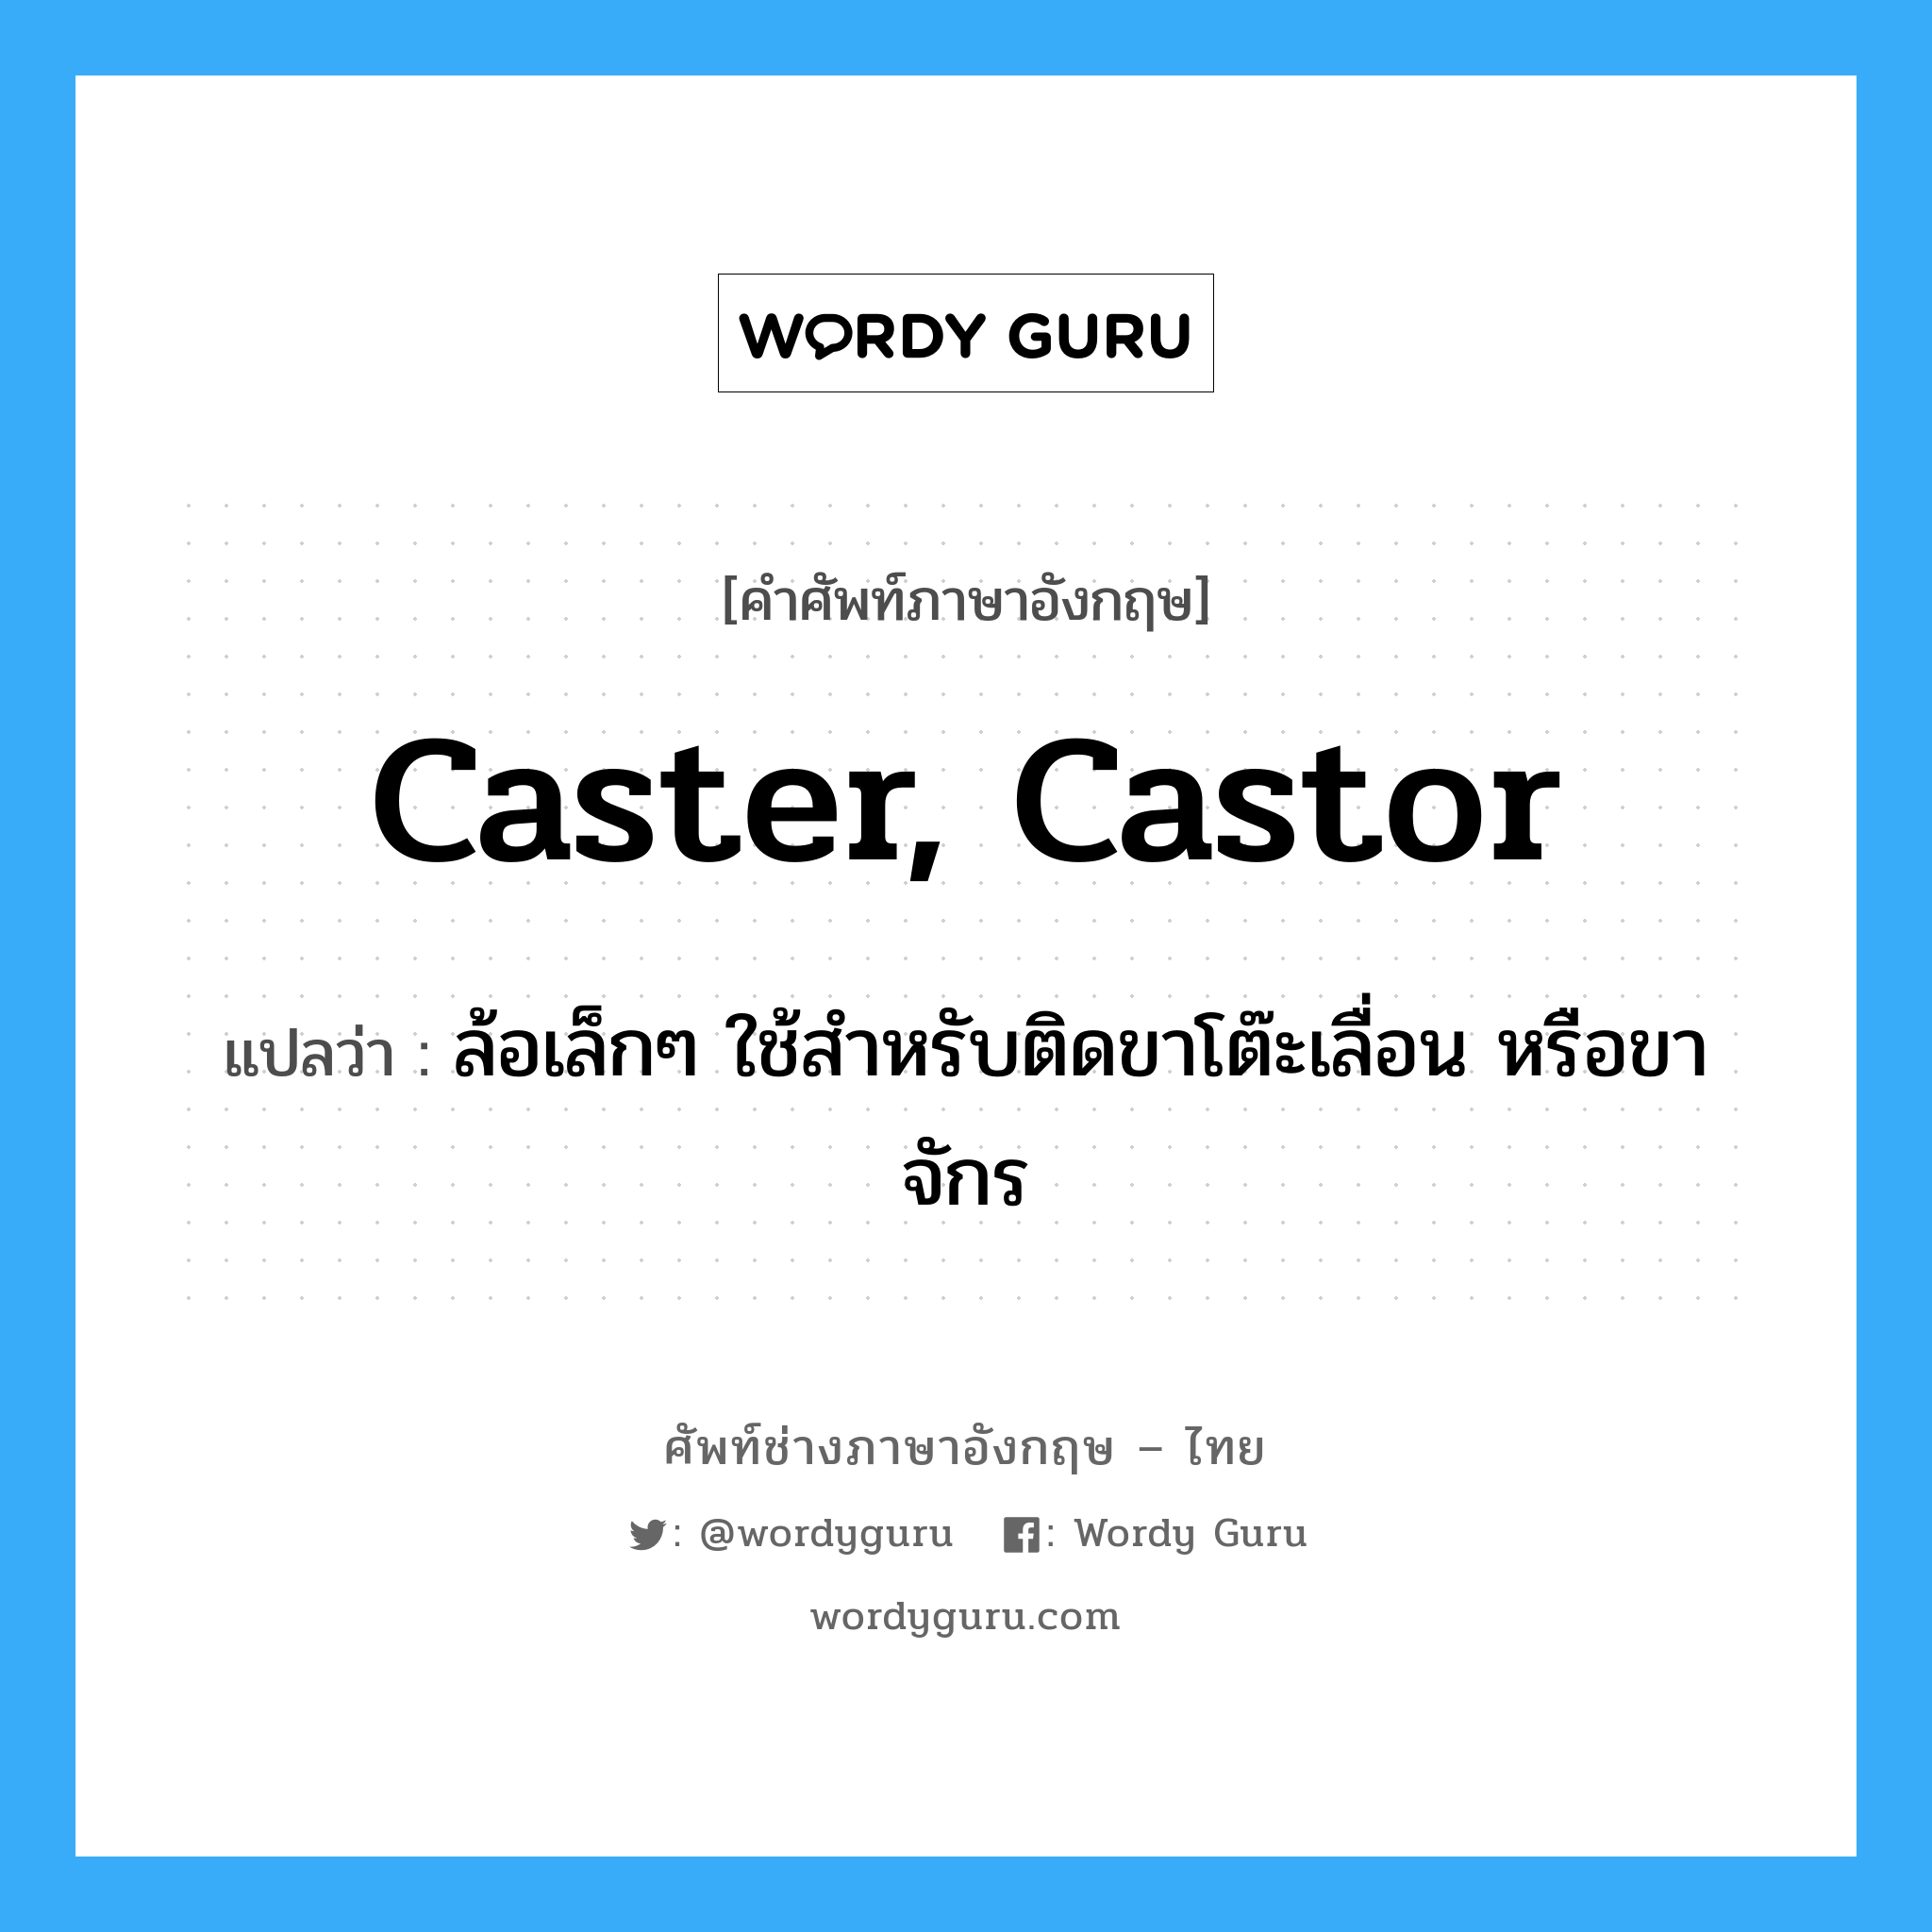 caster, castor แปลว่า?, คำศัพท์ช่างภาษาอังกฤษ - ไทย caster, castor คำศัพท์ภาษาอังกฤษ caster, castor แปลว่า ล้อเล็กๆ ใช้สำหรับติดขาโต๊ะเลื่อน หรือขาจักร